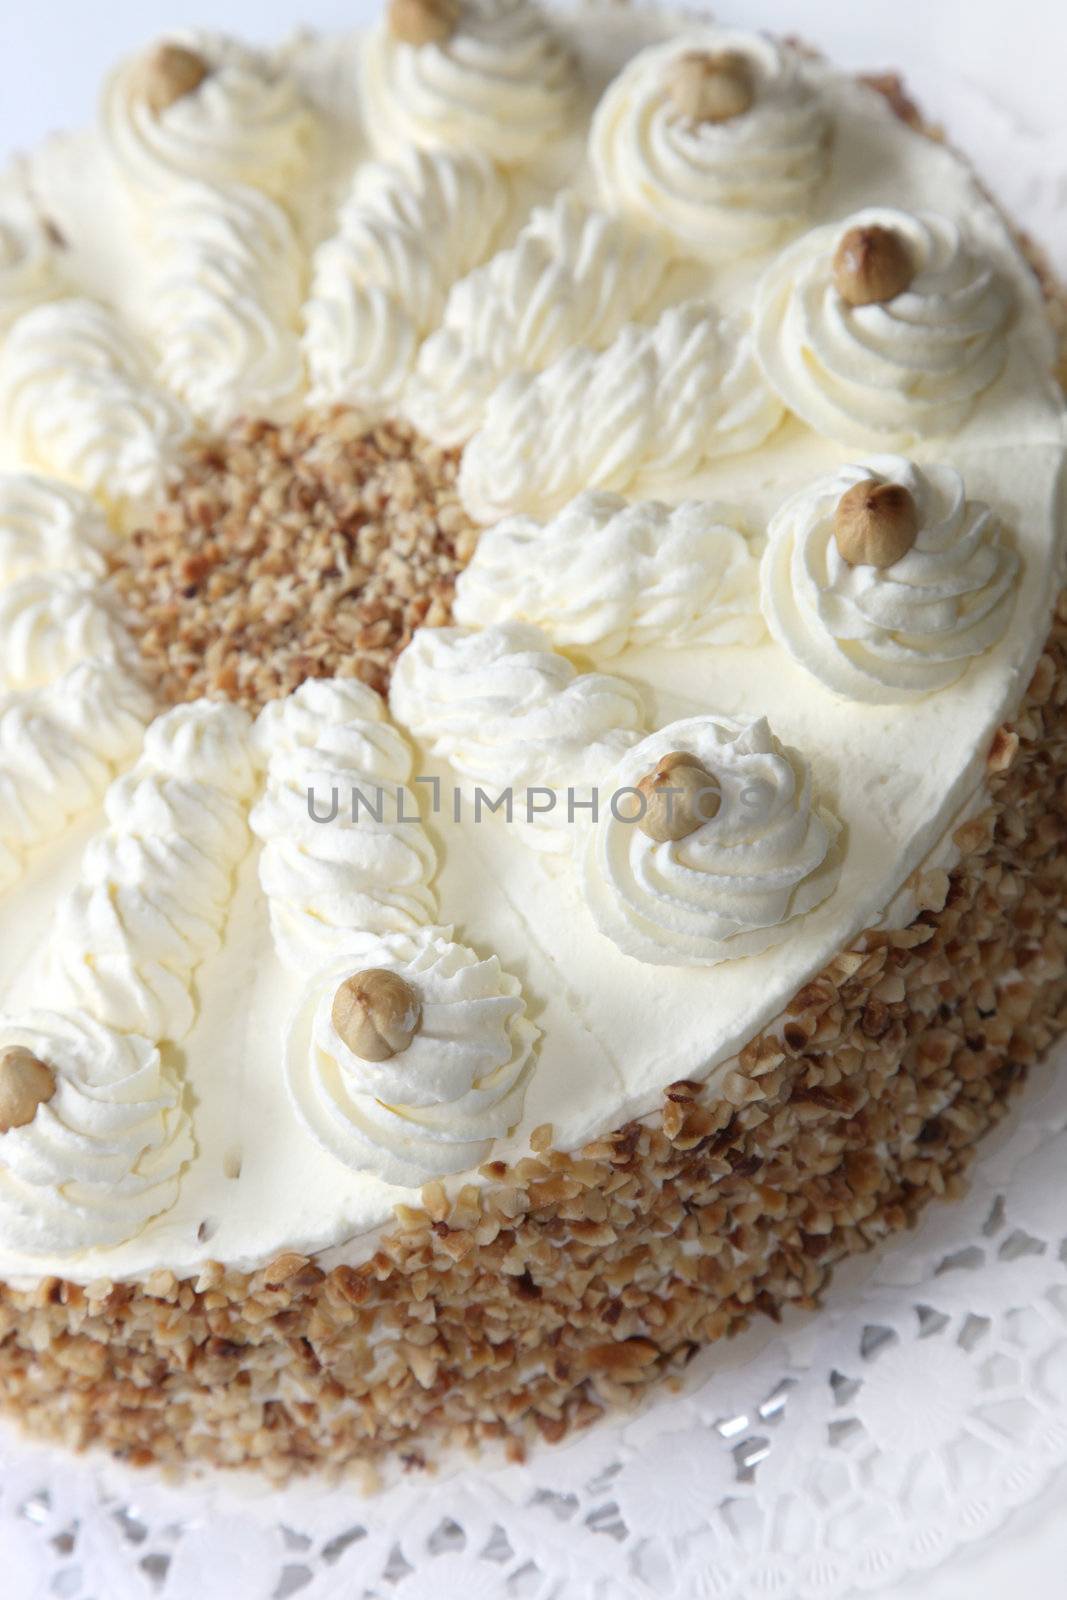 Cream cake with almond edge - close-up